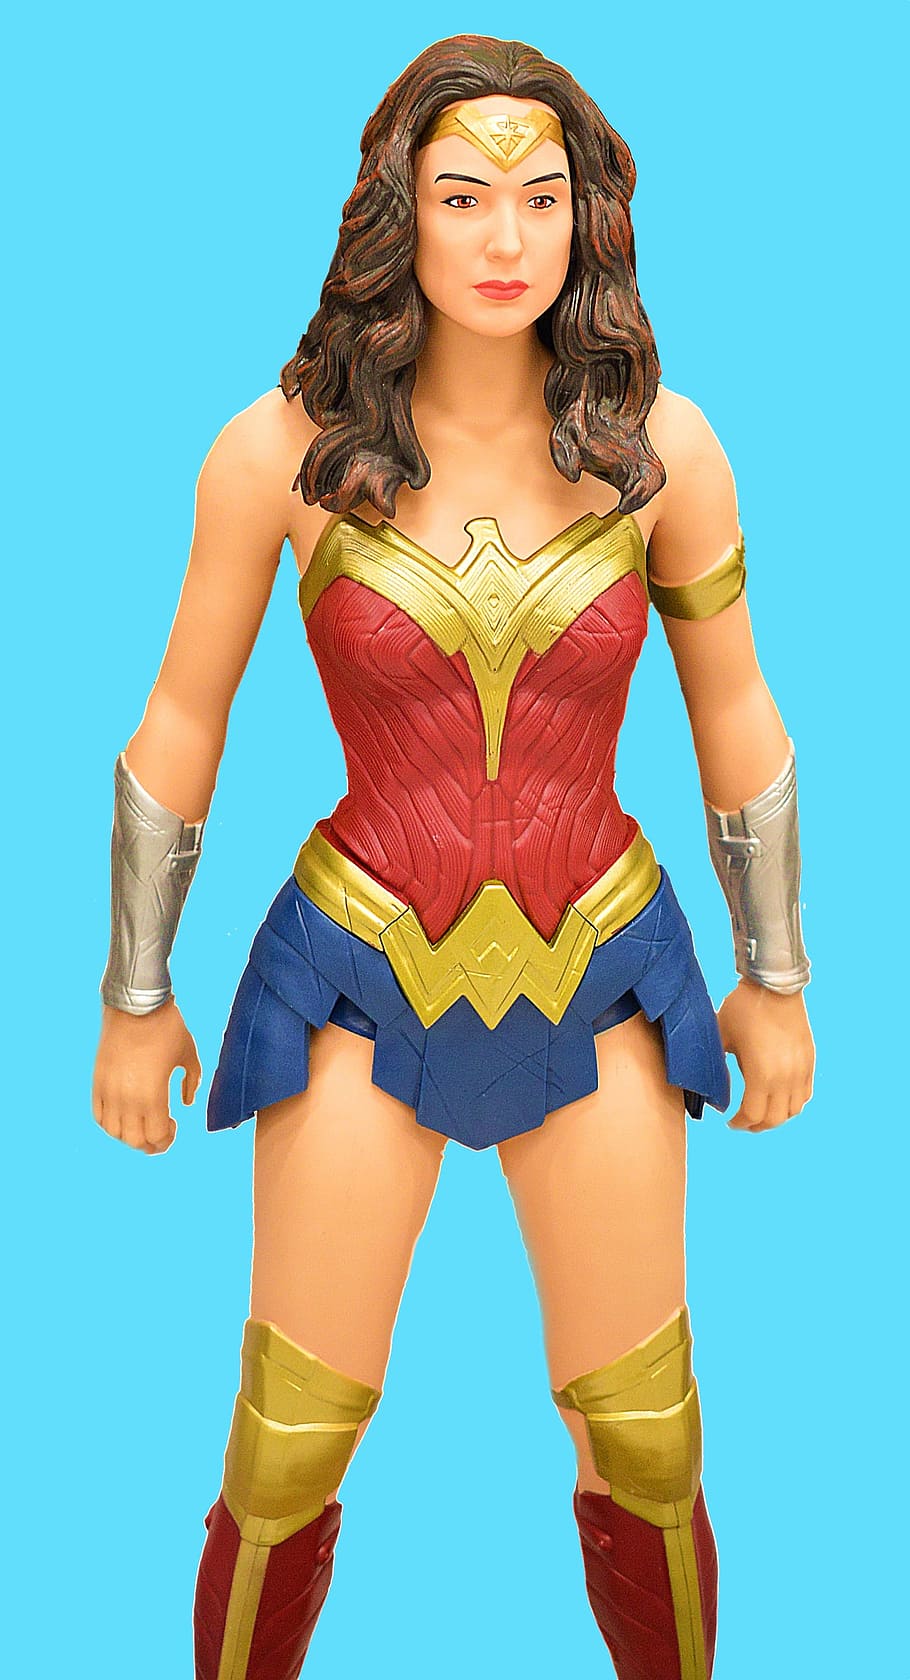 Wonder Woman, Superhero, Strong, strength, female, costume, power, powerful, feminism, feminist